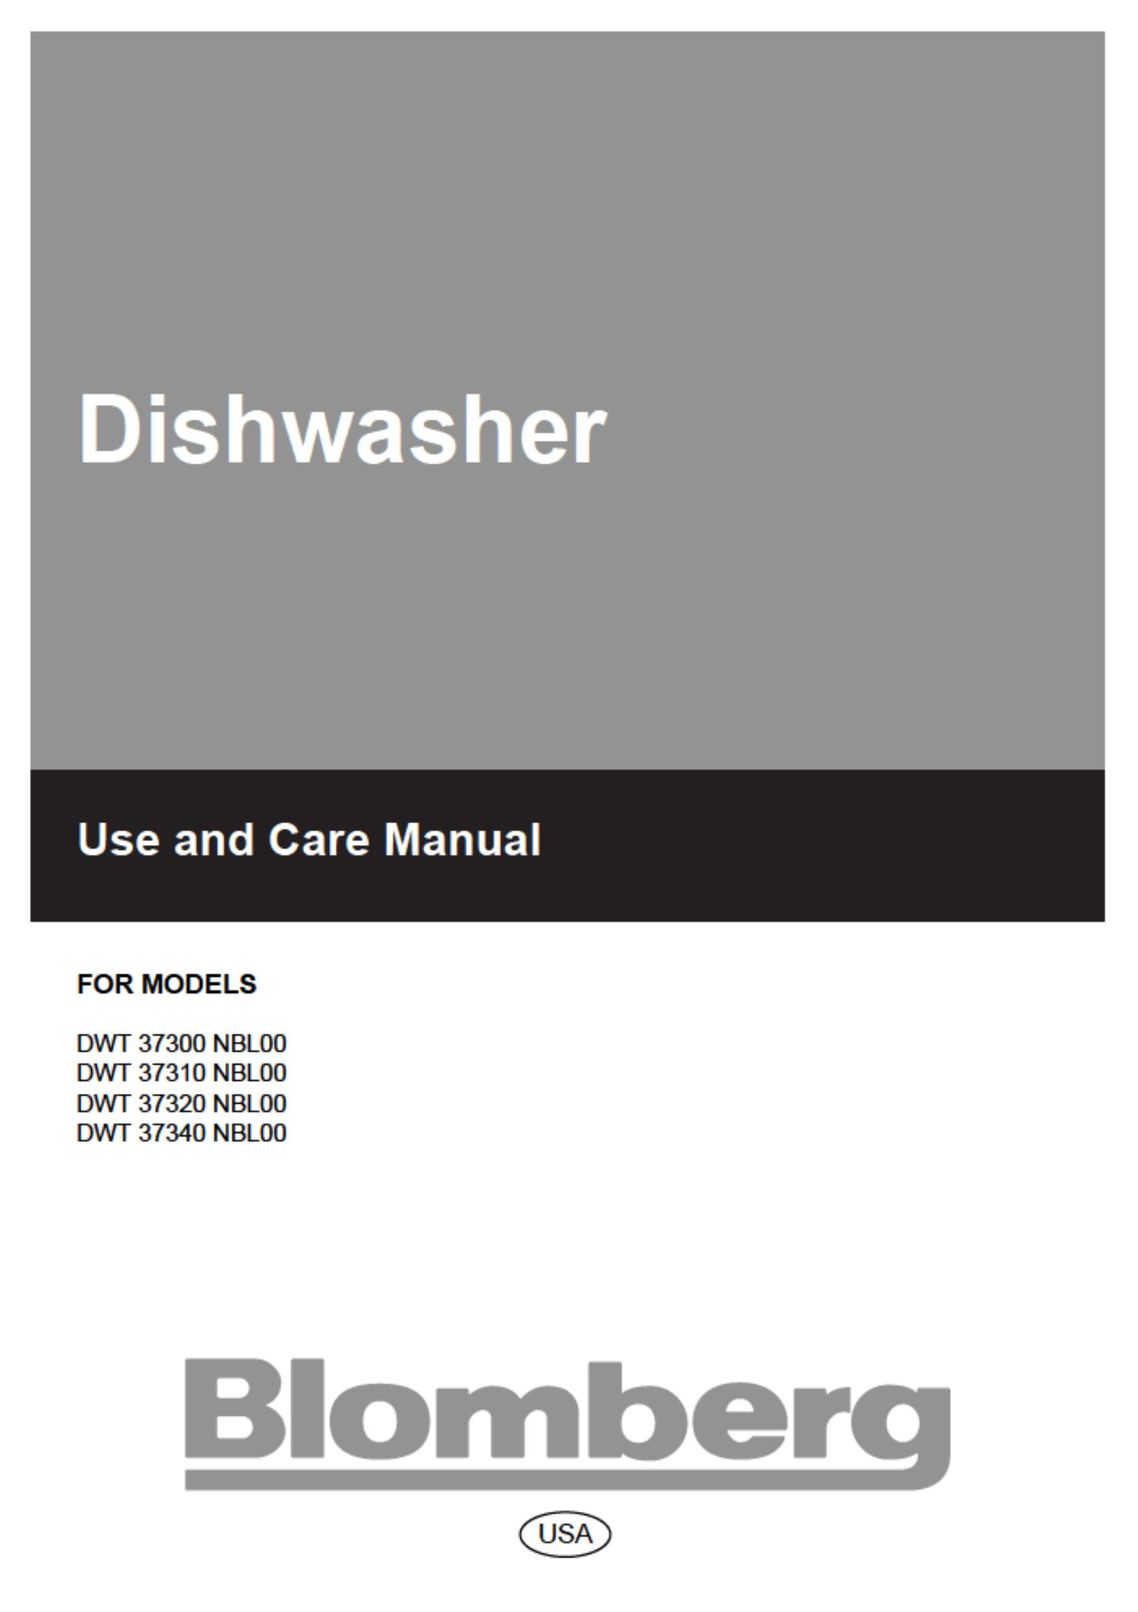 Blomberg DWT37340NBL00 Dishwasher User Manual